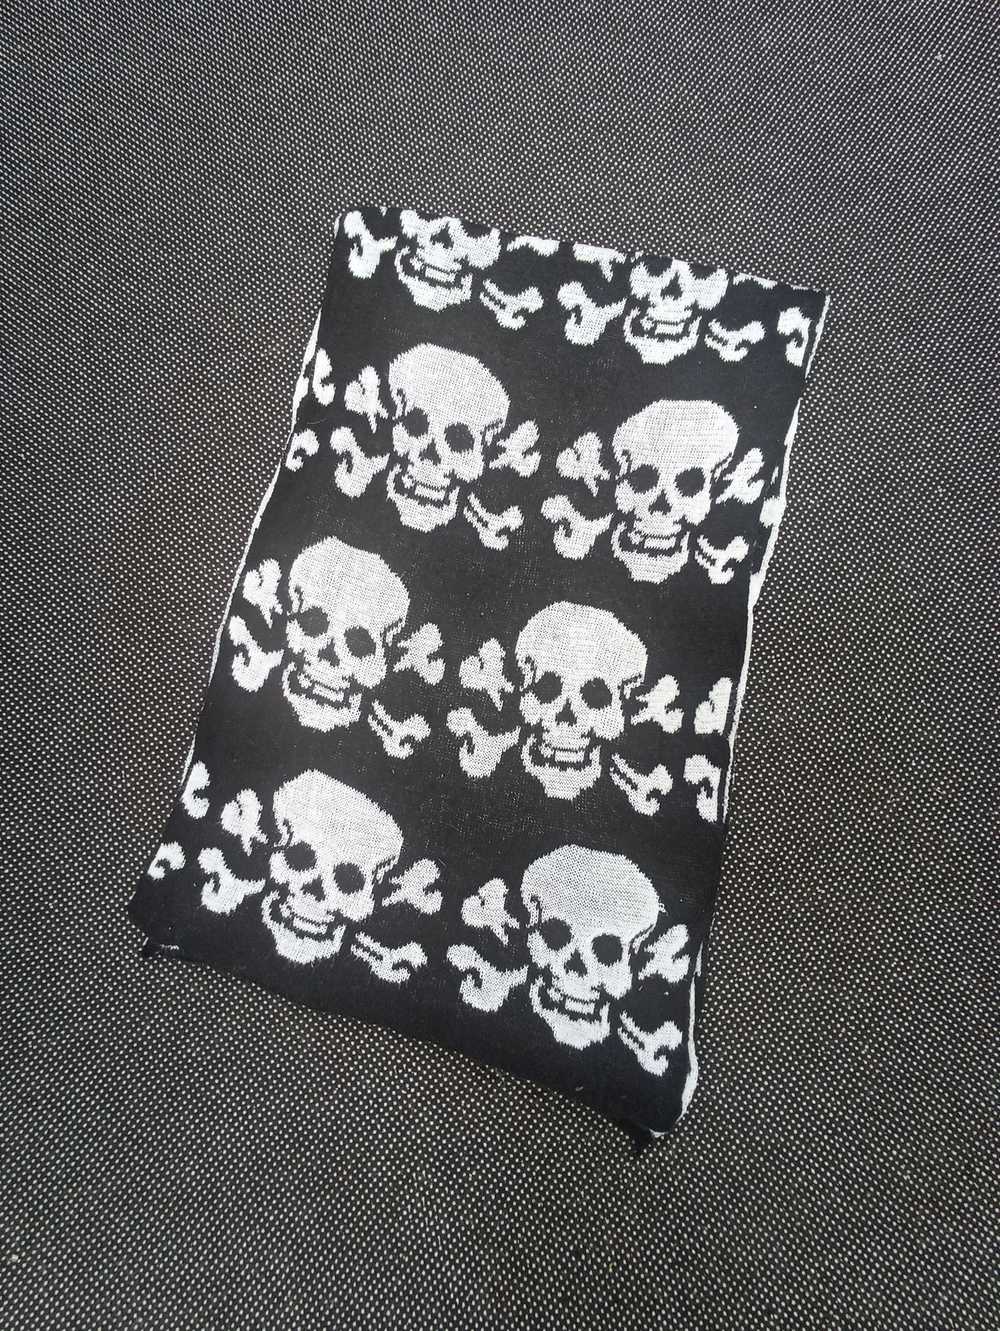 Other × Skulls × Streetwear Skull scarf design - … - image 1